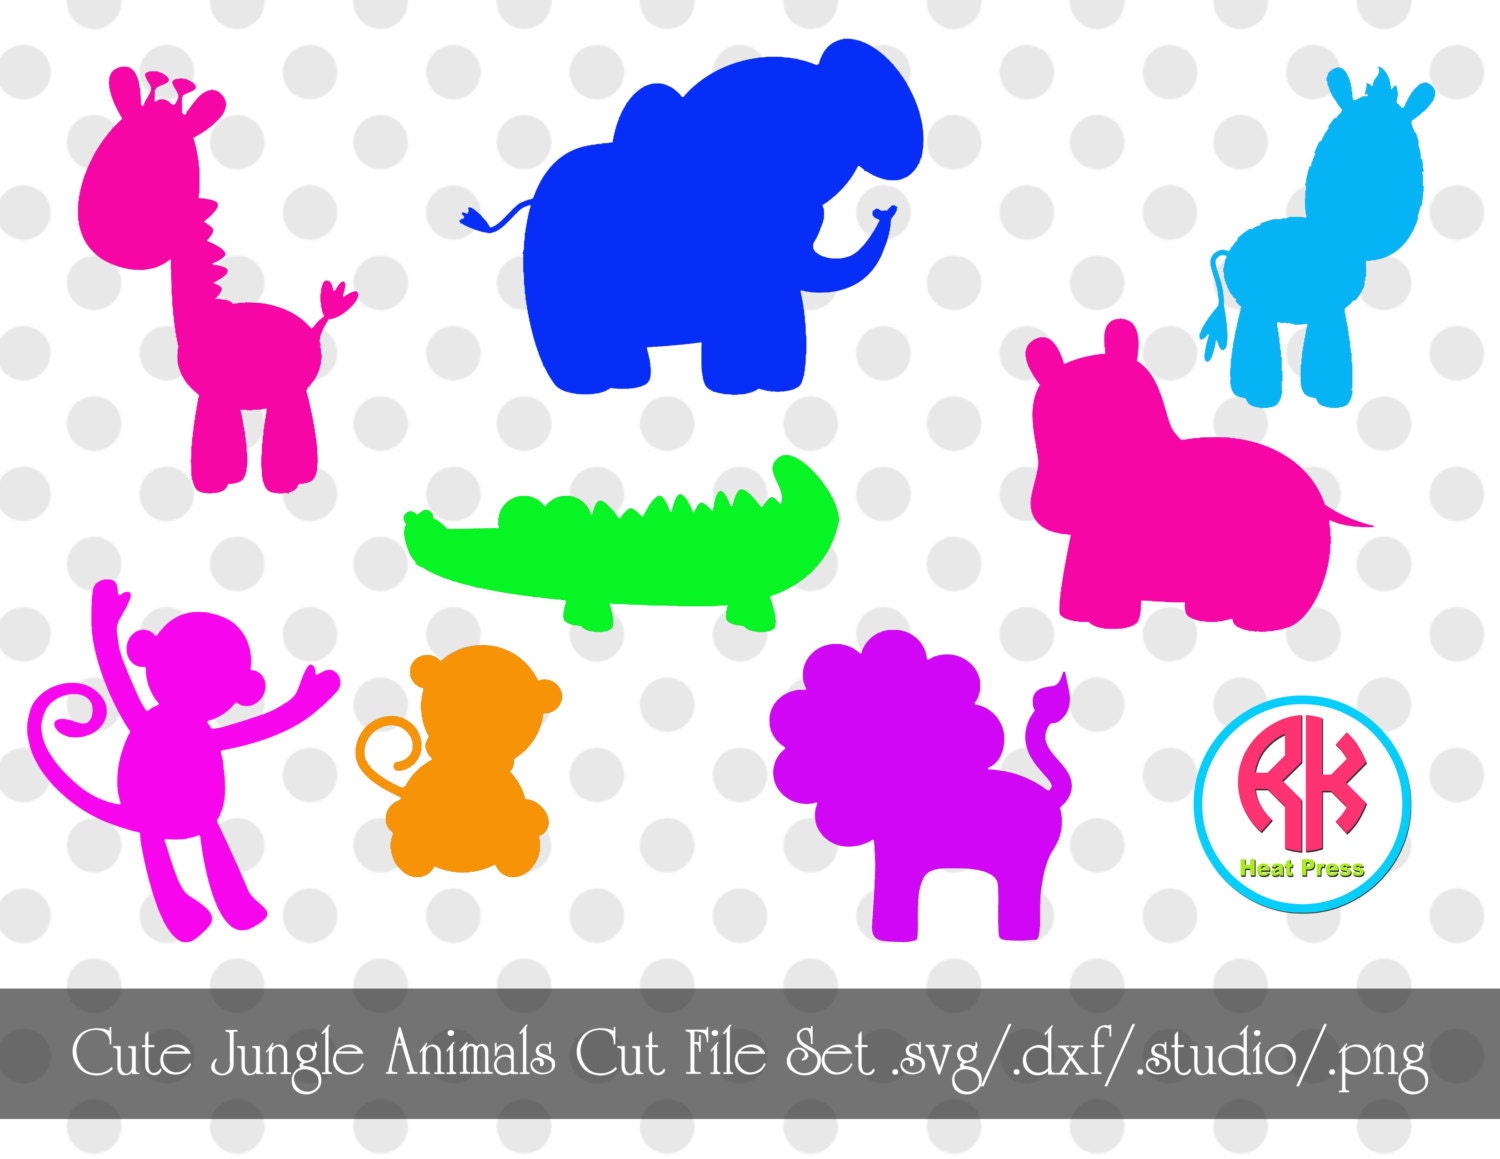 Download Cute Jungle Animals Cut Files Set .PNG .DXF .SVG